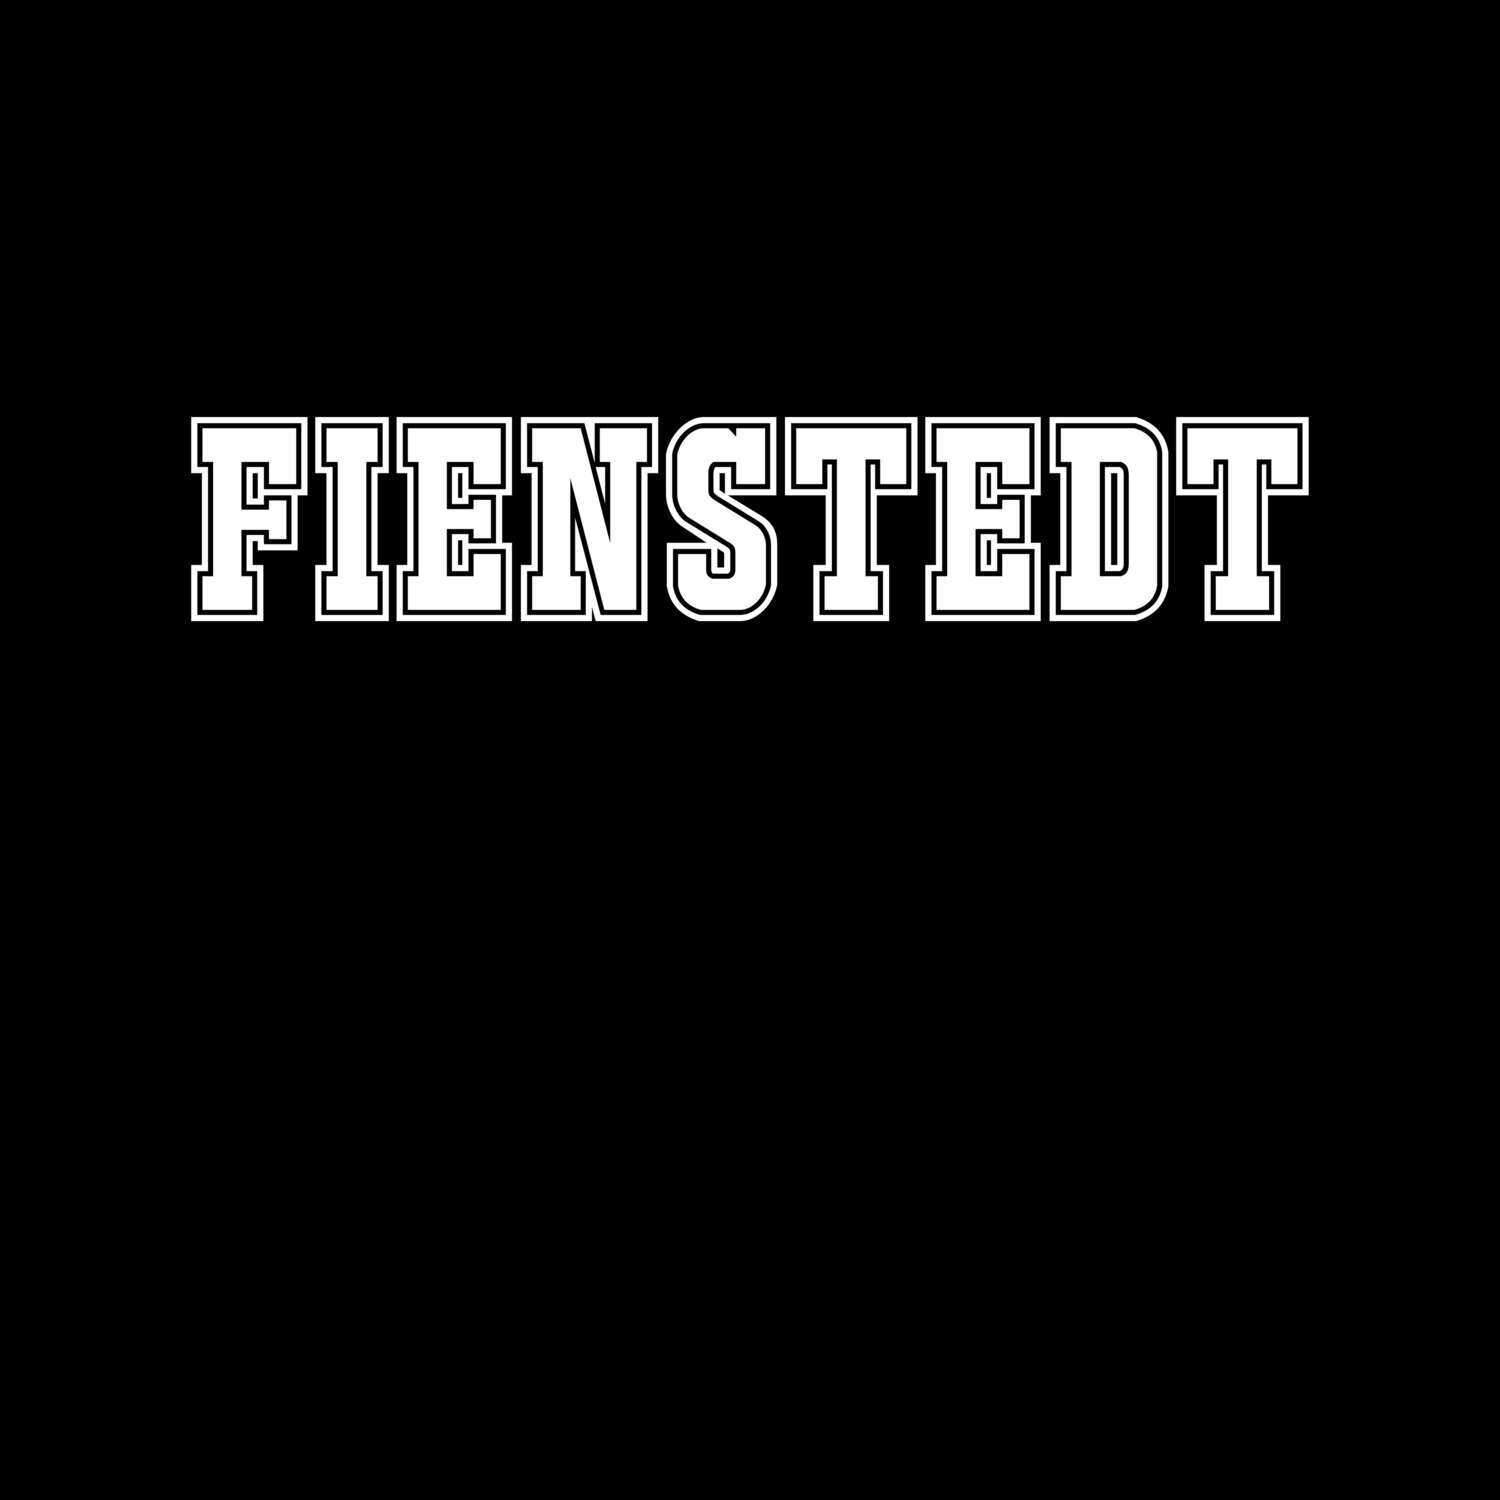 Fienstedt T-Shirt »Classic«